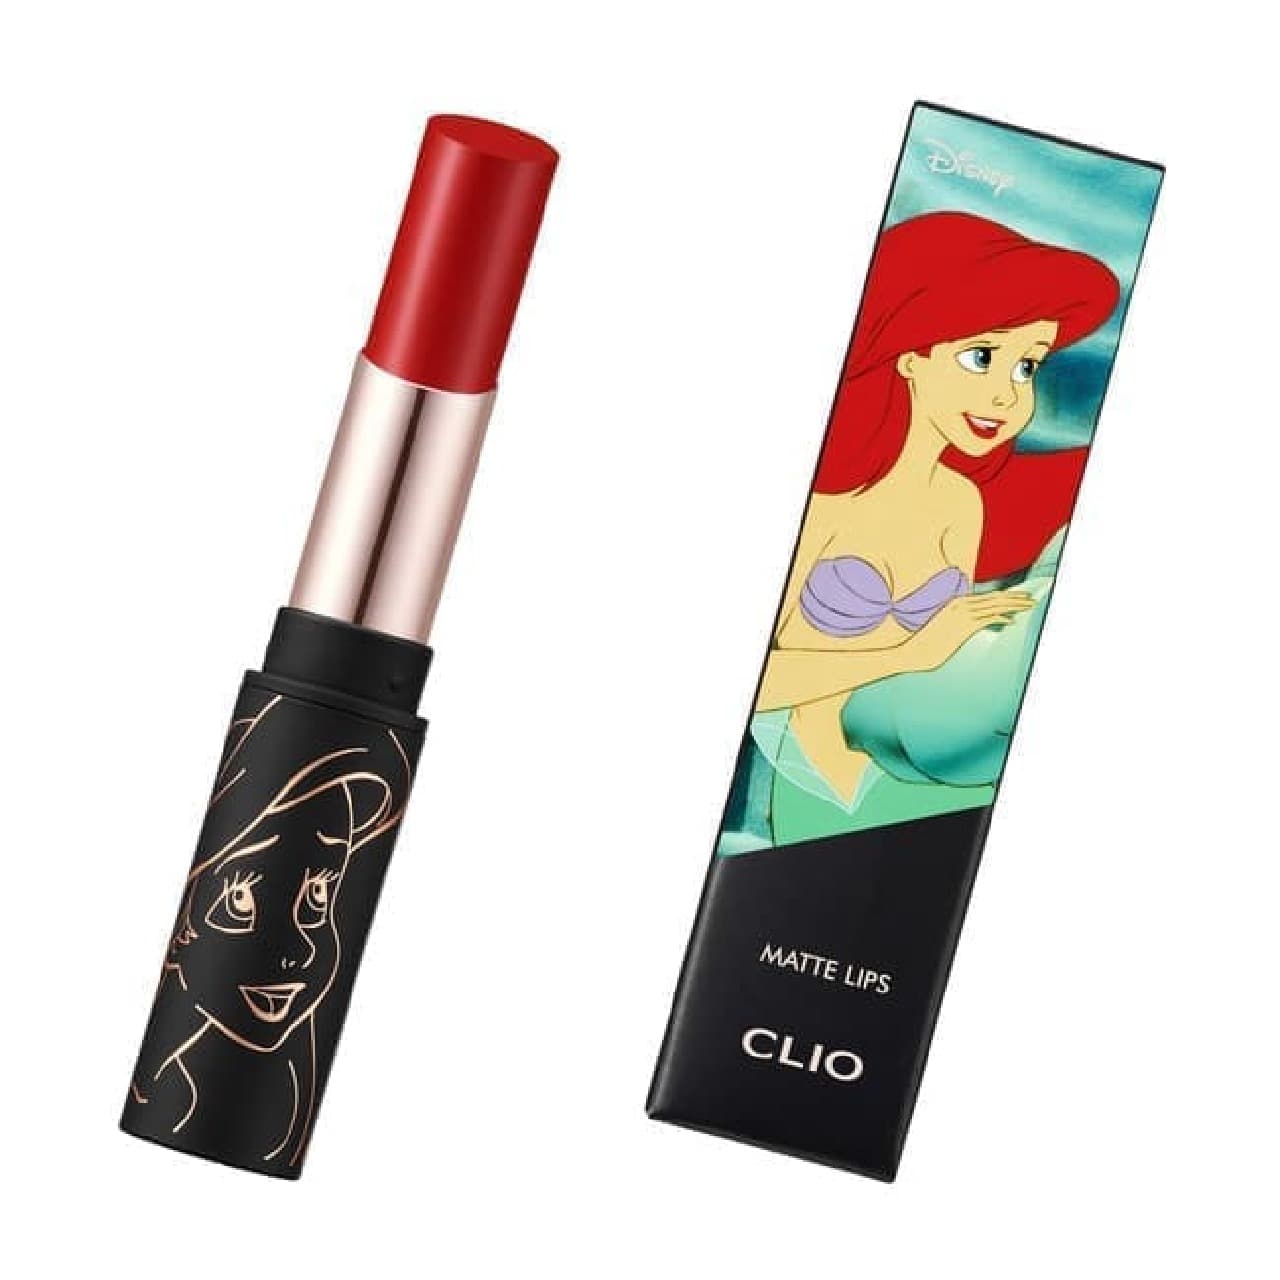 Disney Store x Korean cosmetics "CLIO"